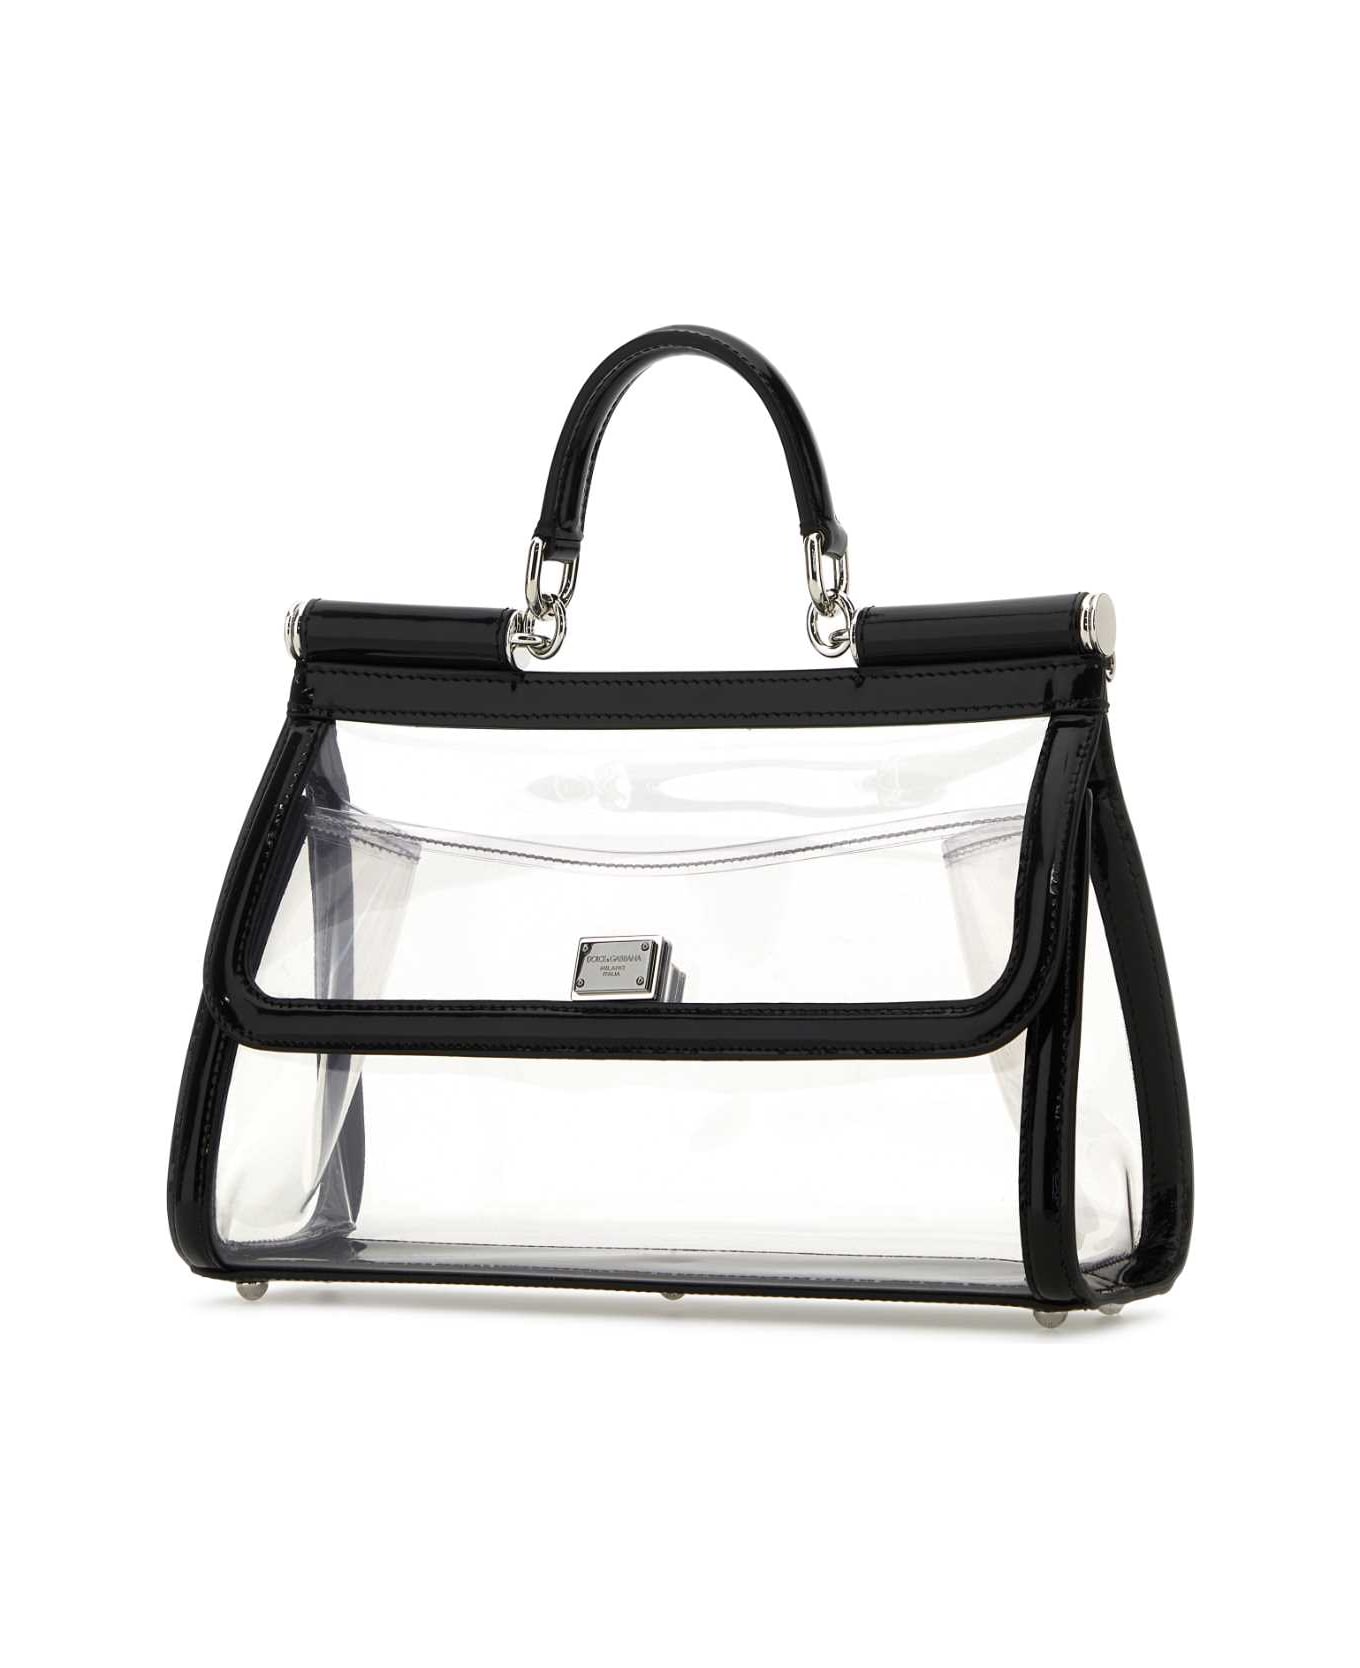 Dolce & Gabbana Two-tone Pvc And Leather Medium Sicily Handbag - TRASPARENTENERO トートバッグ